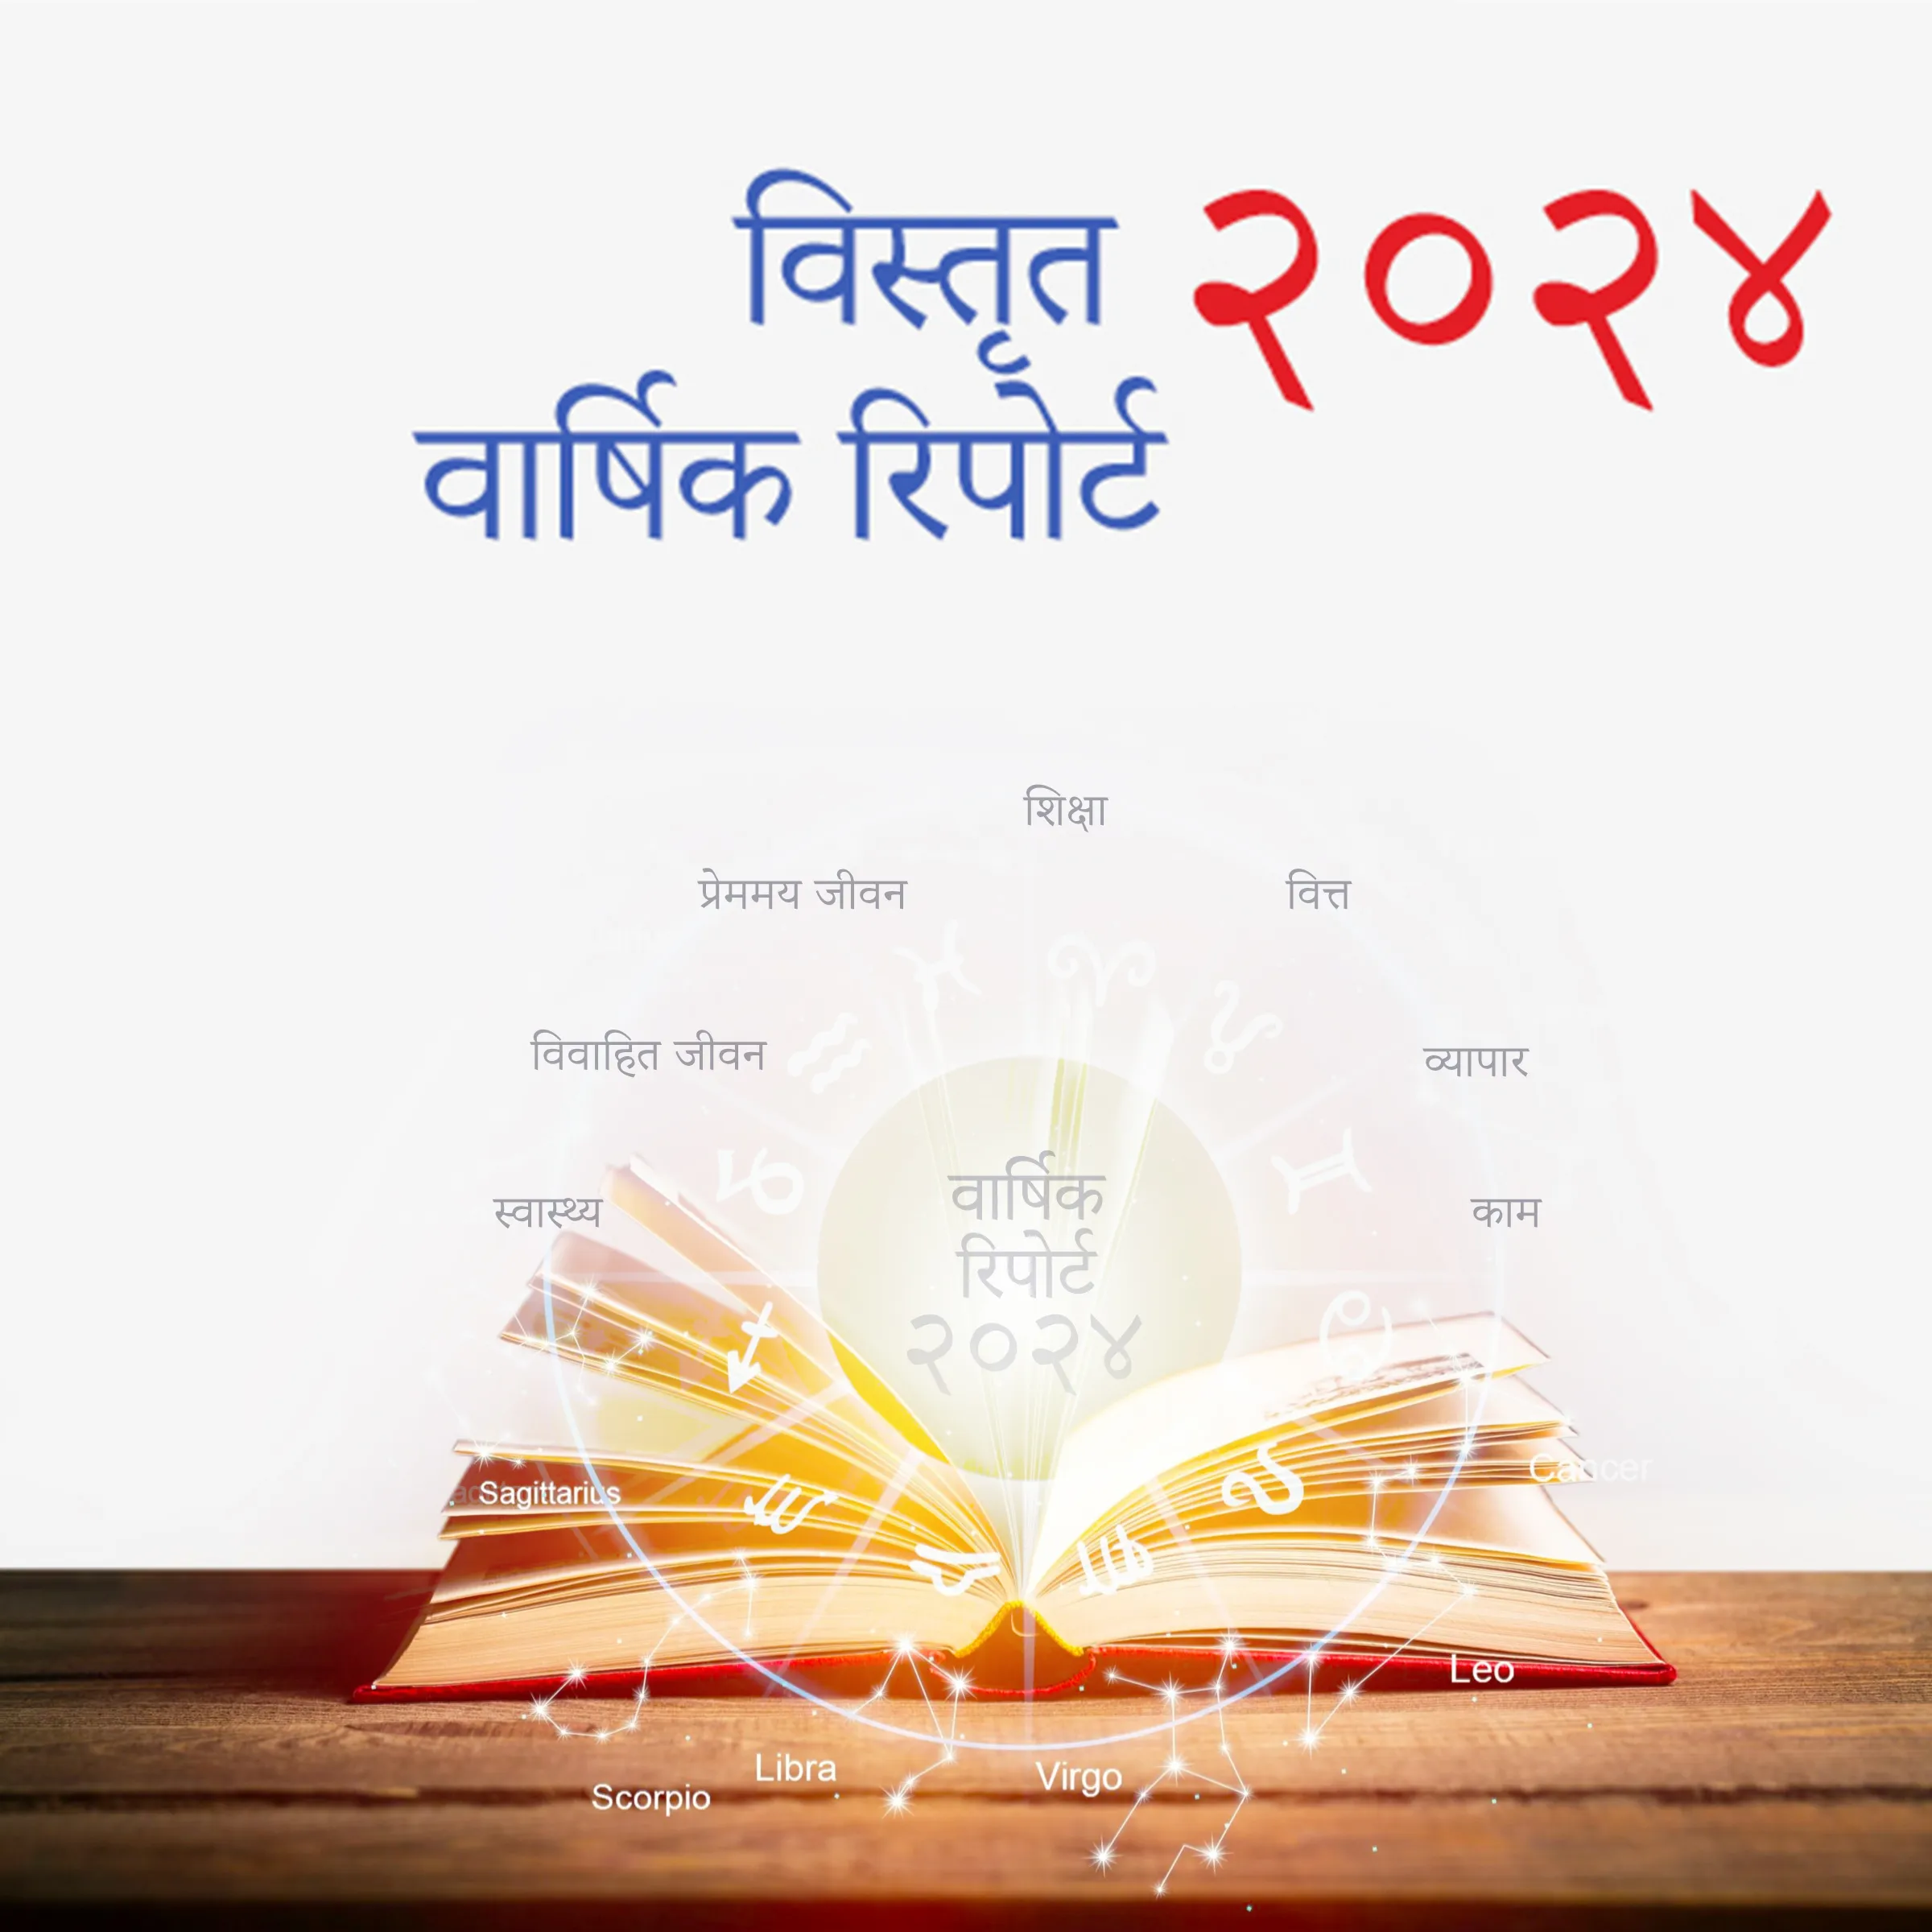 २०२४ विस्तृत वार्षिक रिपोर्ट – Acharya Bhattacharya